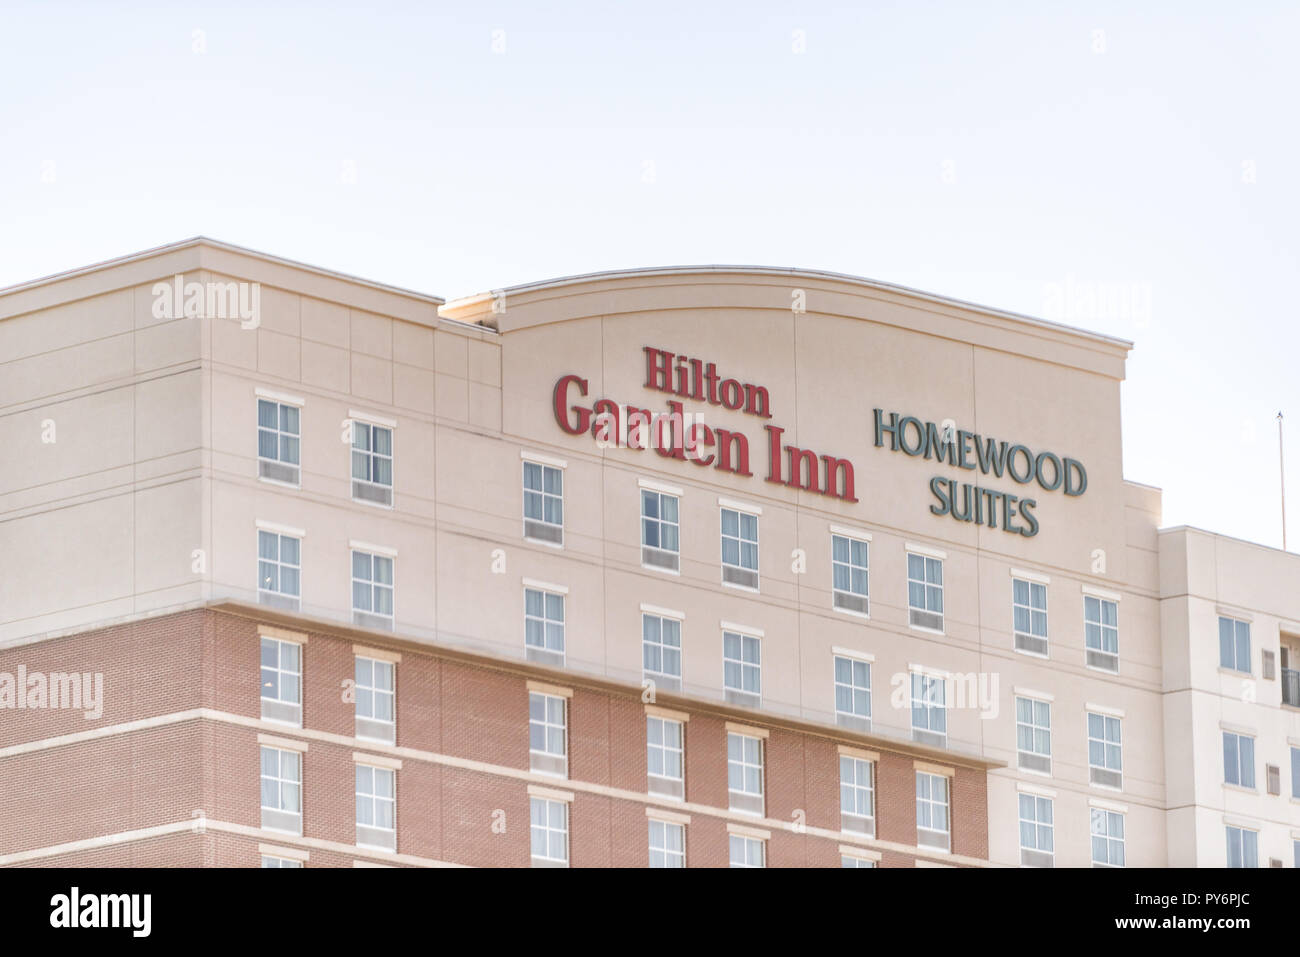 Atlanta, USA - April 20, 2018: Hilton Garden Inn sign on building in Georgia city, Homewood suites, closeup and sky Stock Photo